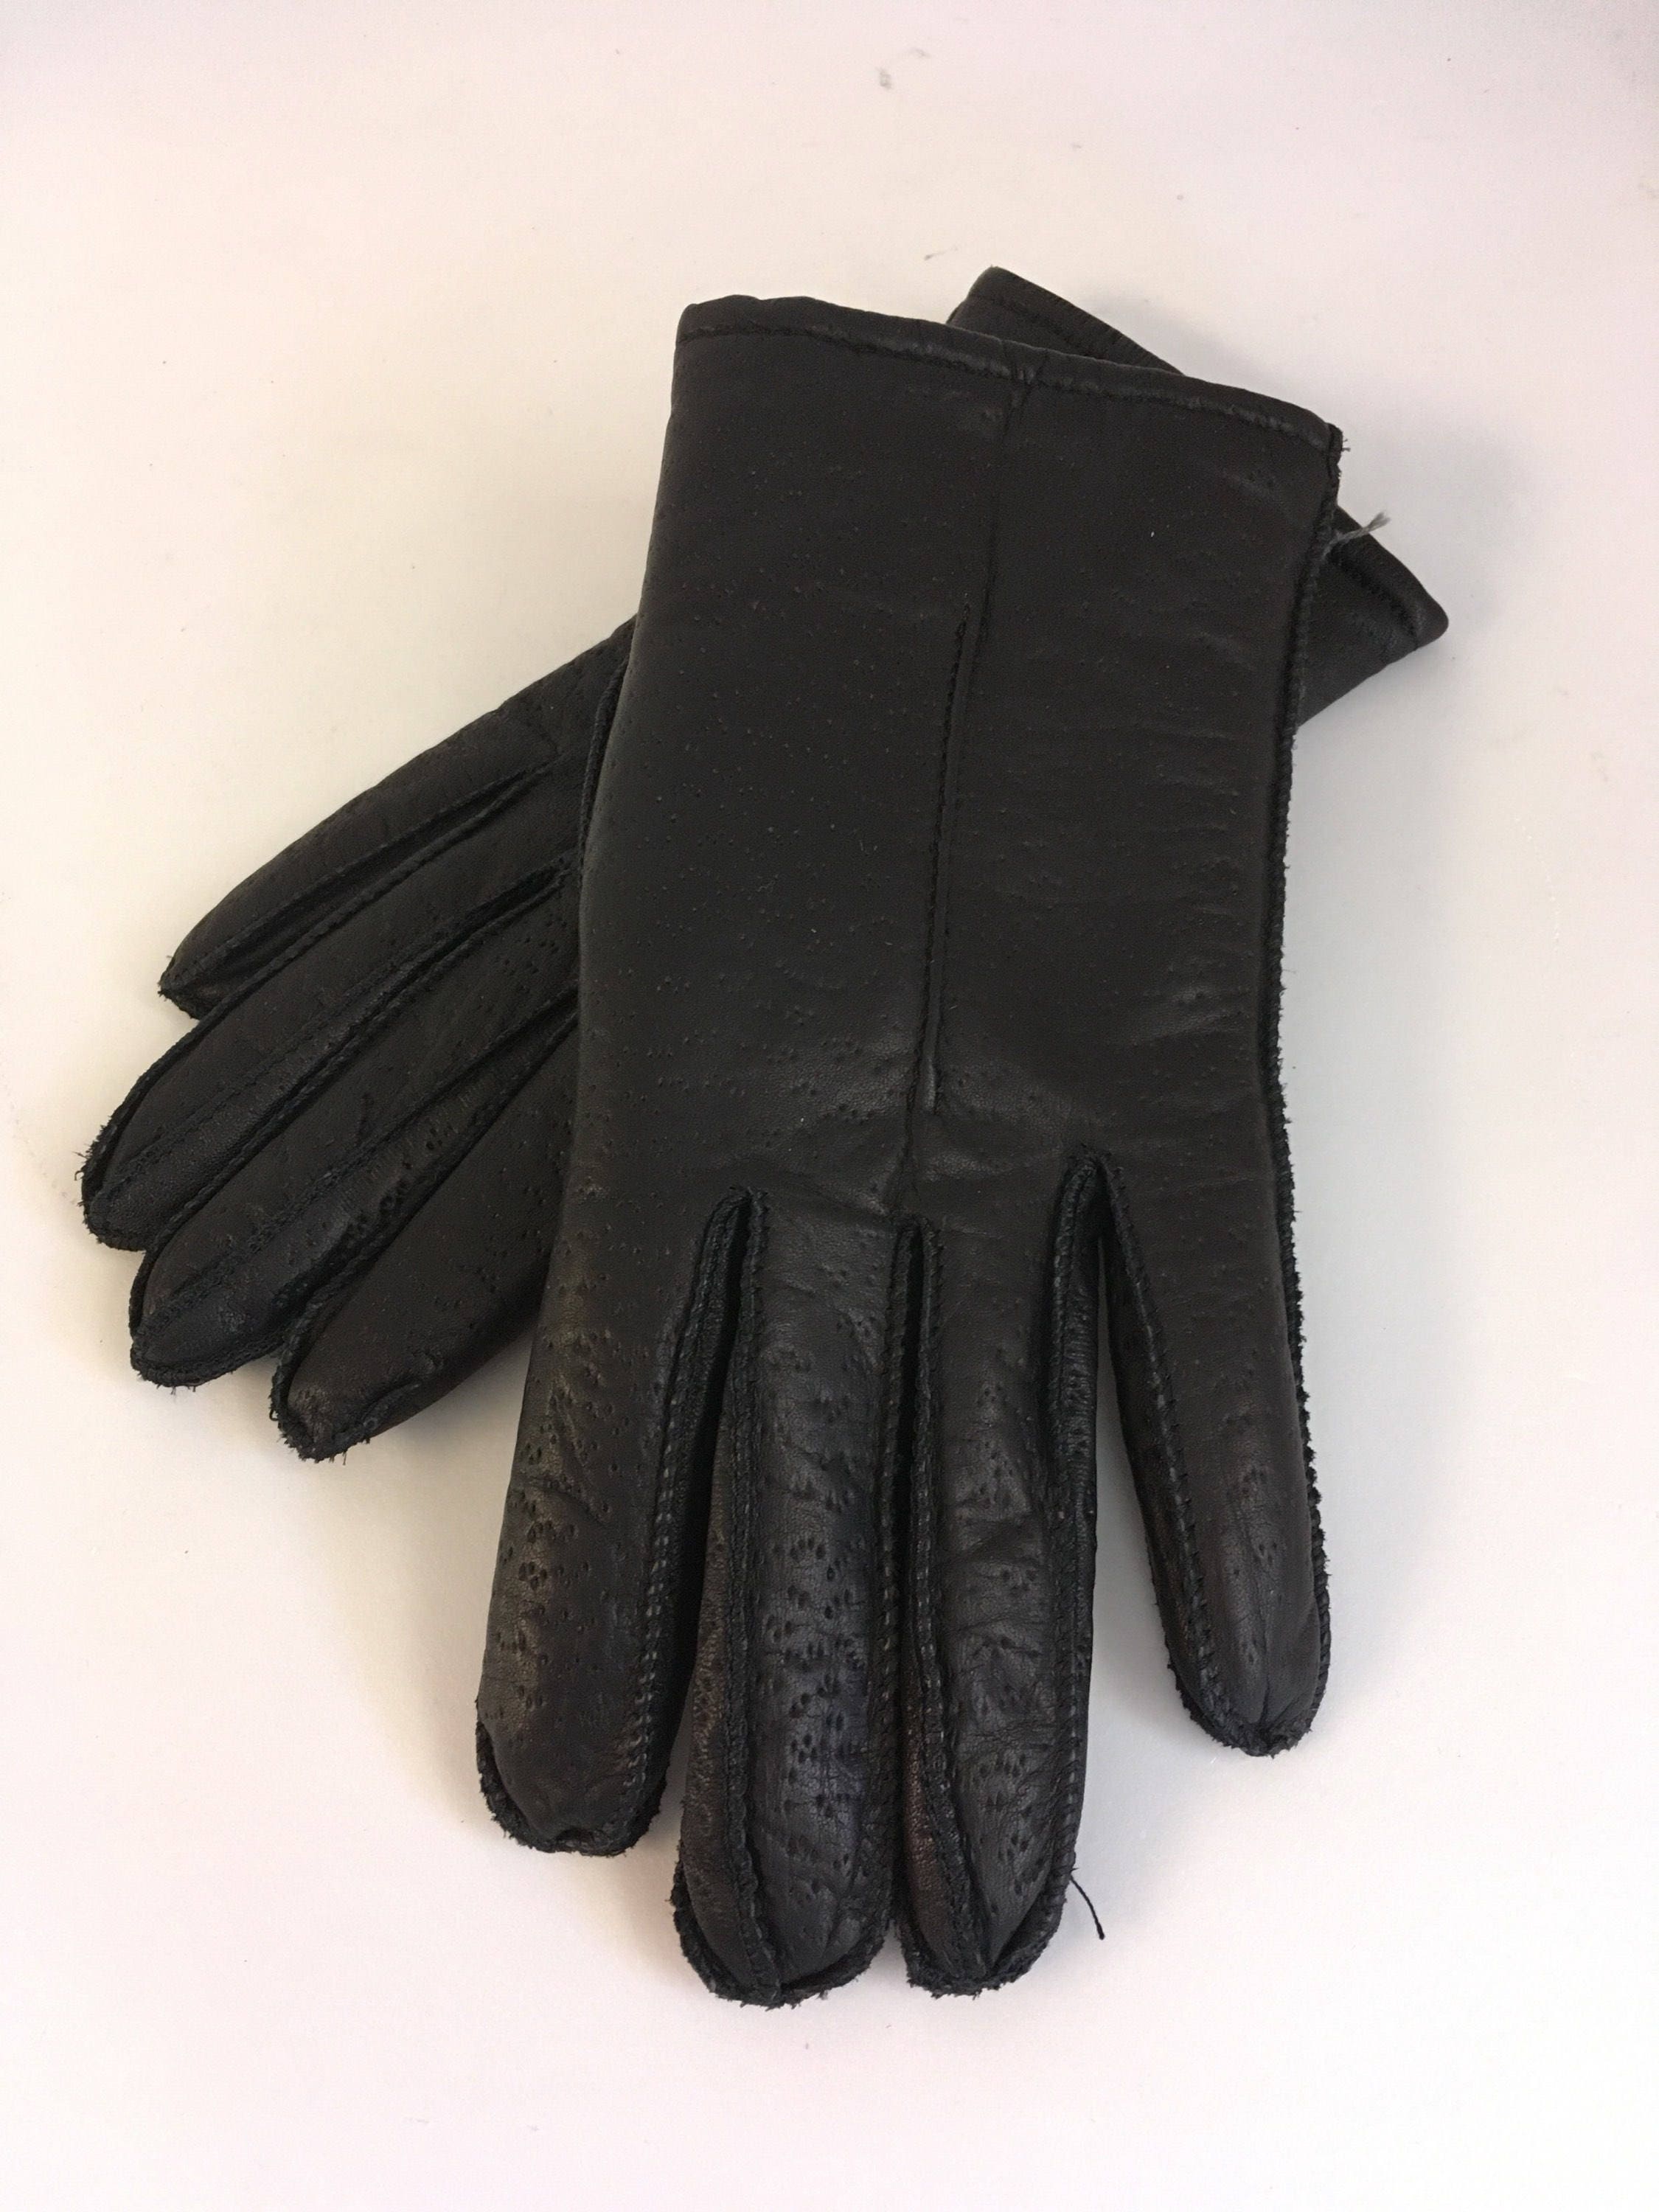 Vintage Leather Glovesshort Black Textured Leather Lined | Etsy